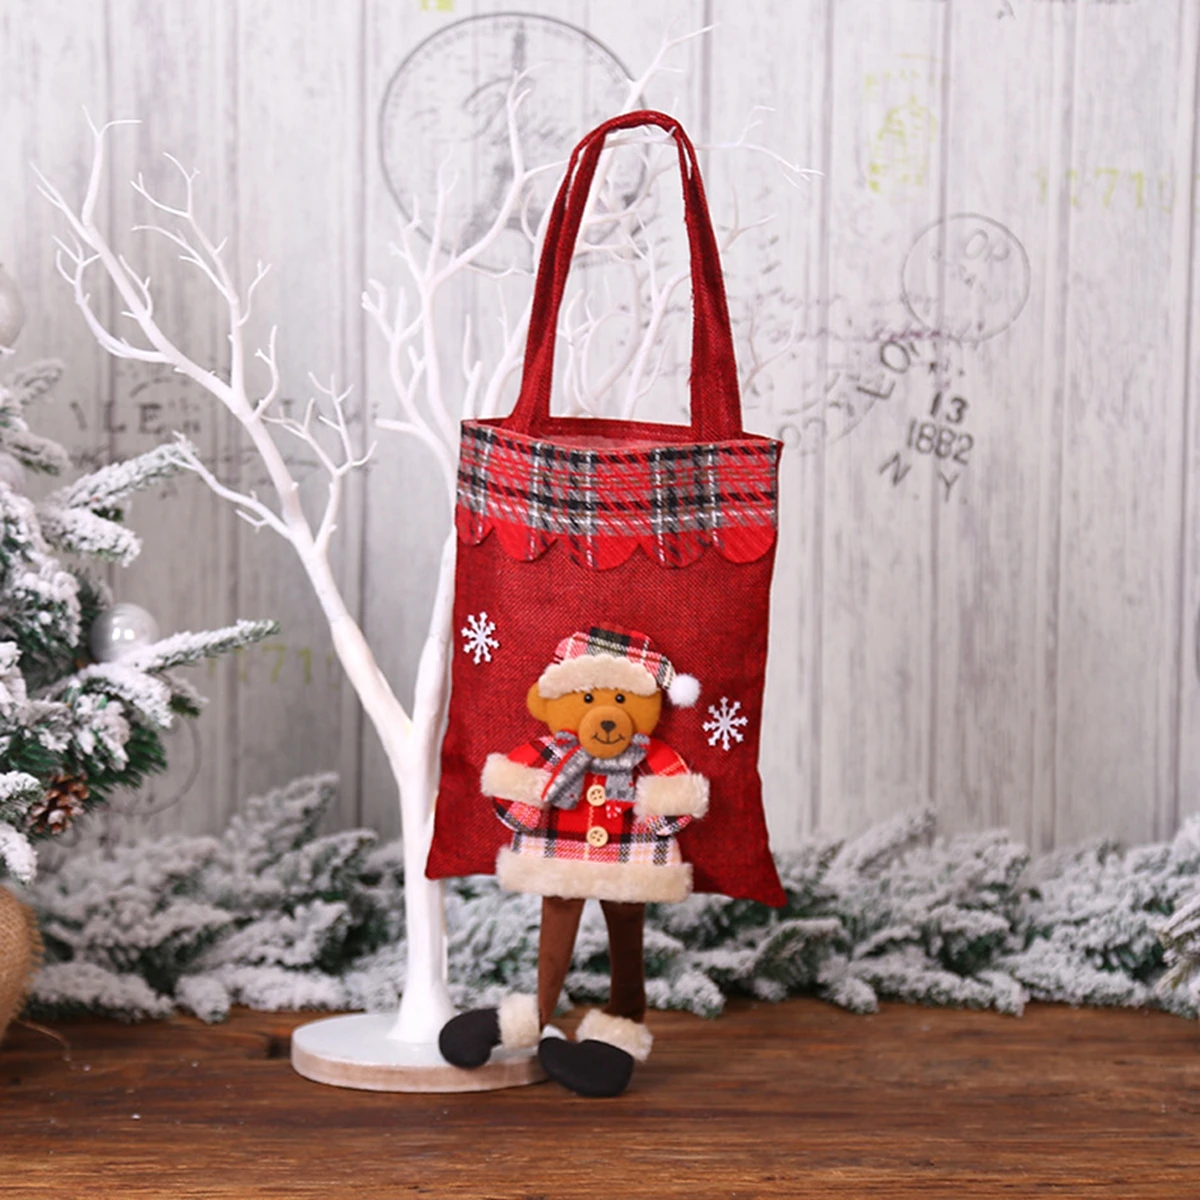 Huiran Christmas Candy Gift Bags Merry Christmas Decorations For Home Xmas Santa Claus Gift Bag Happy New Year Navidad